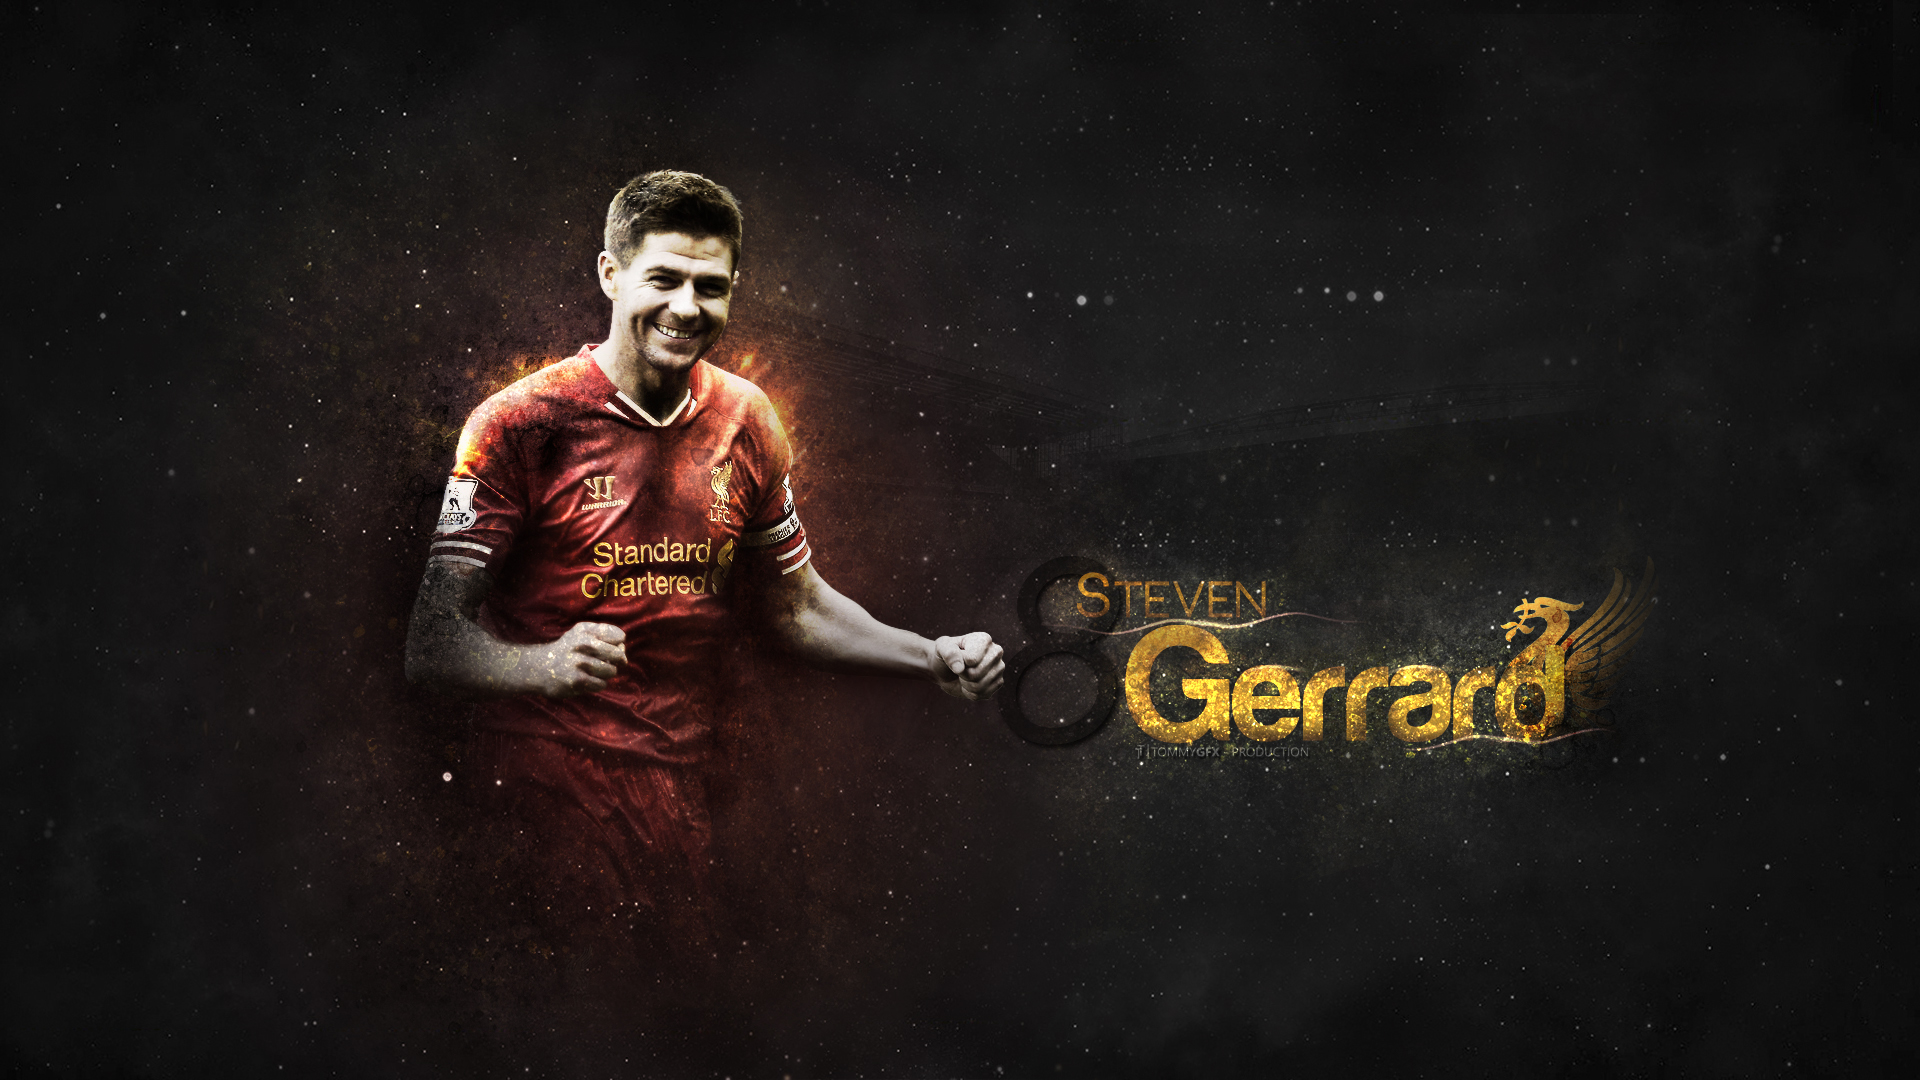 Steven Gerrard Wallpaper And Background Image